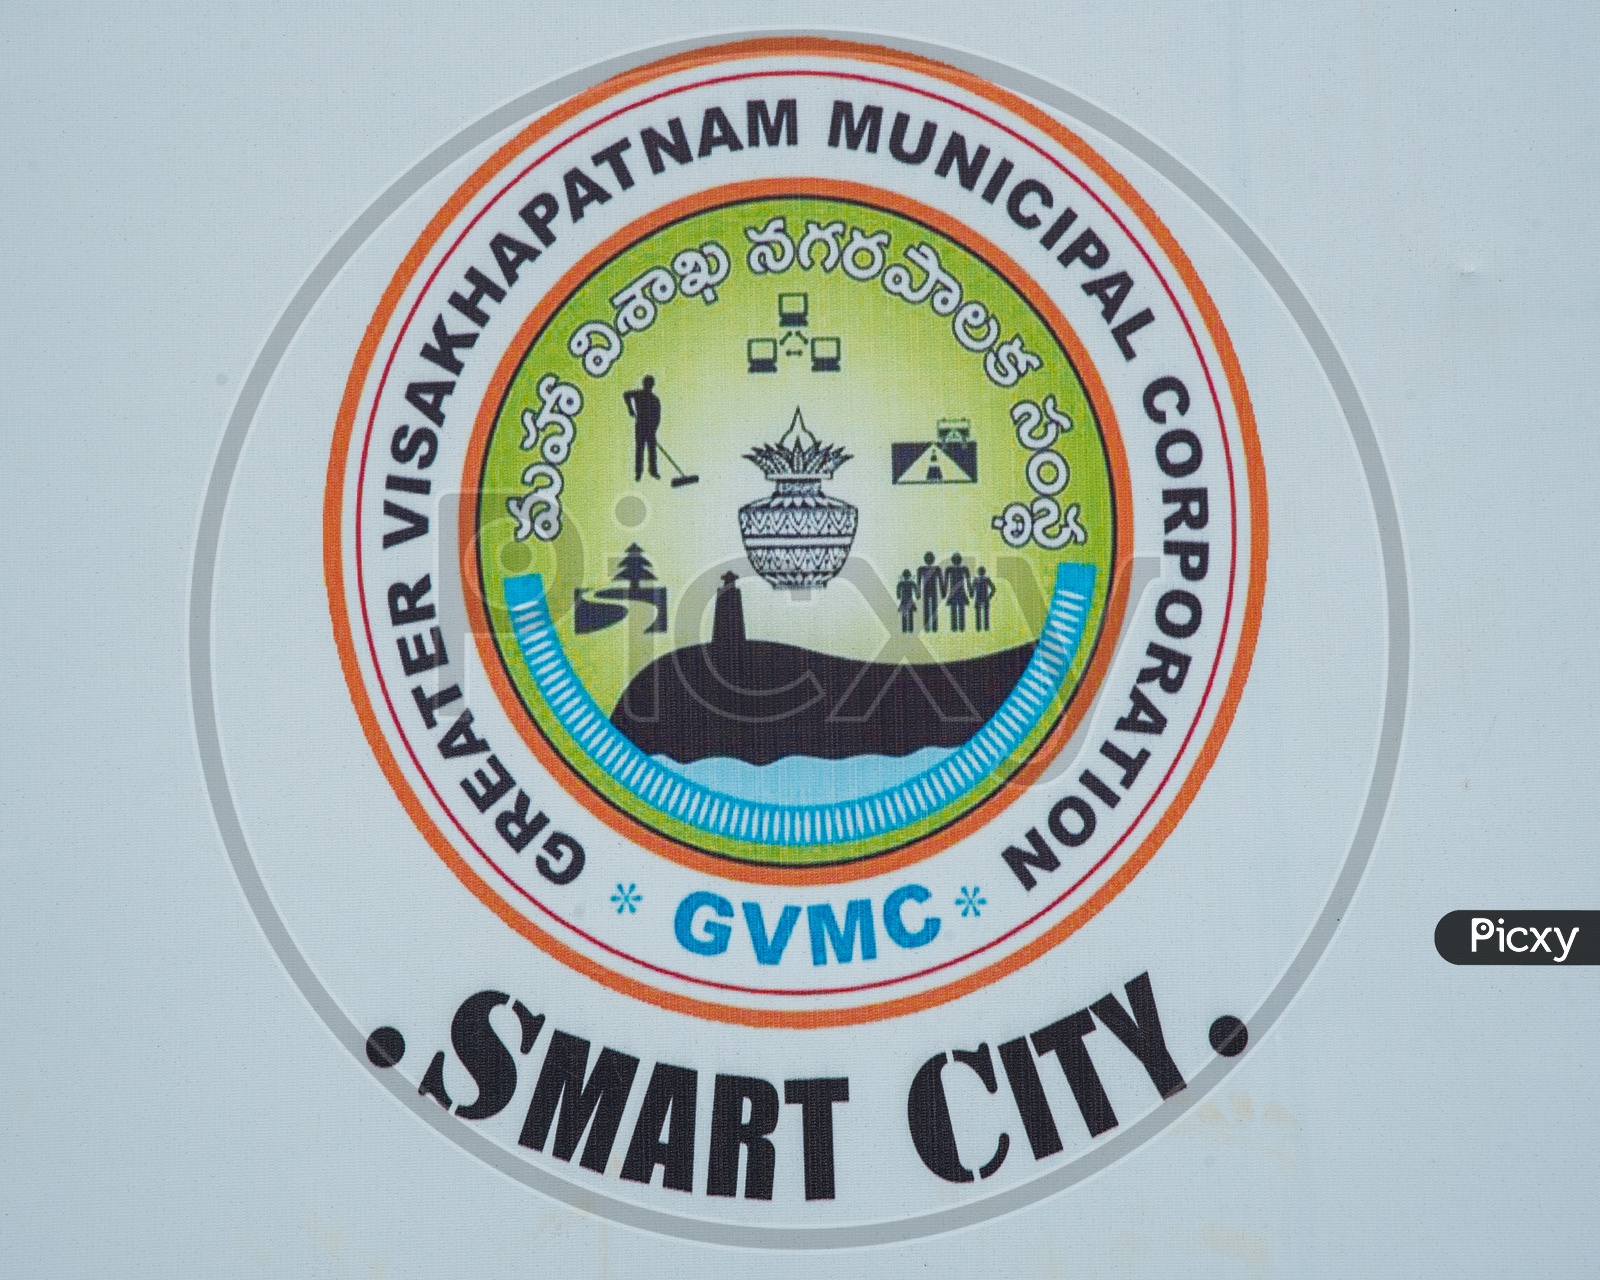 VIZAG - Smart City Logo / Visakhapatnam Muncipal Corporation, GVMC